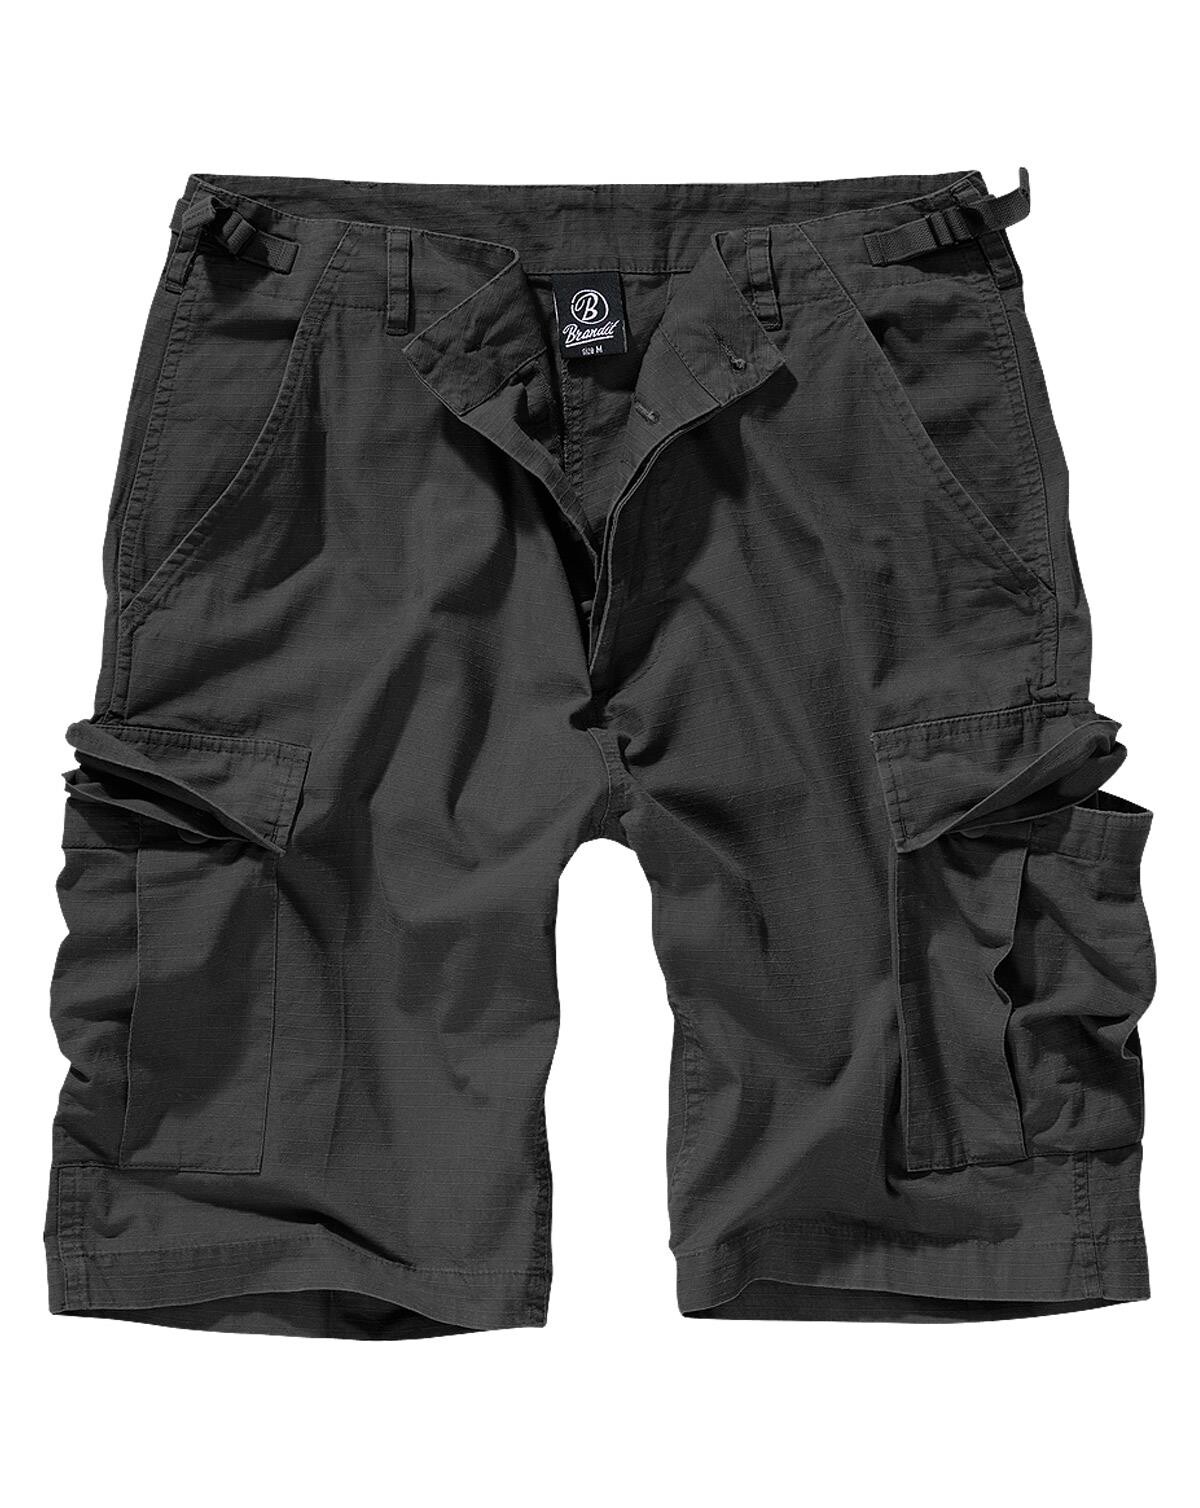 8: Brandit BDU Ripstop Shorts (Sort, L)